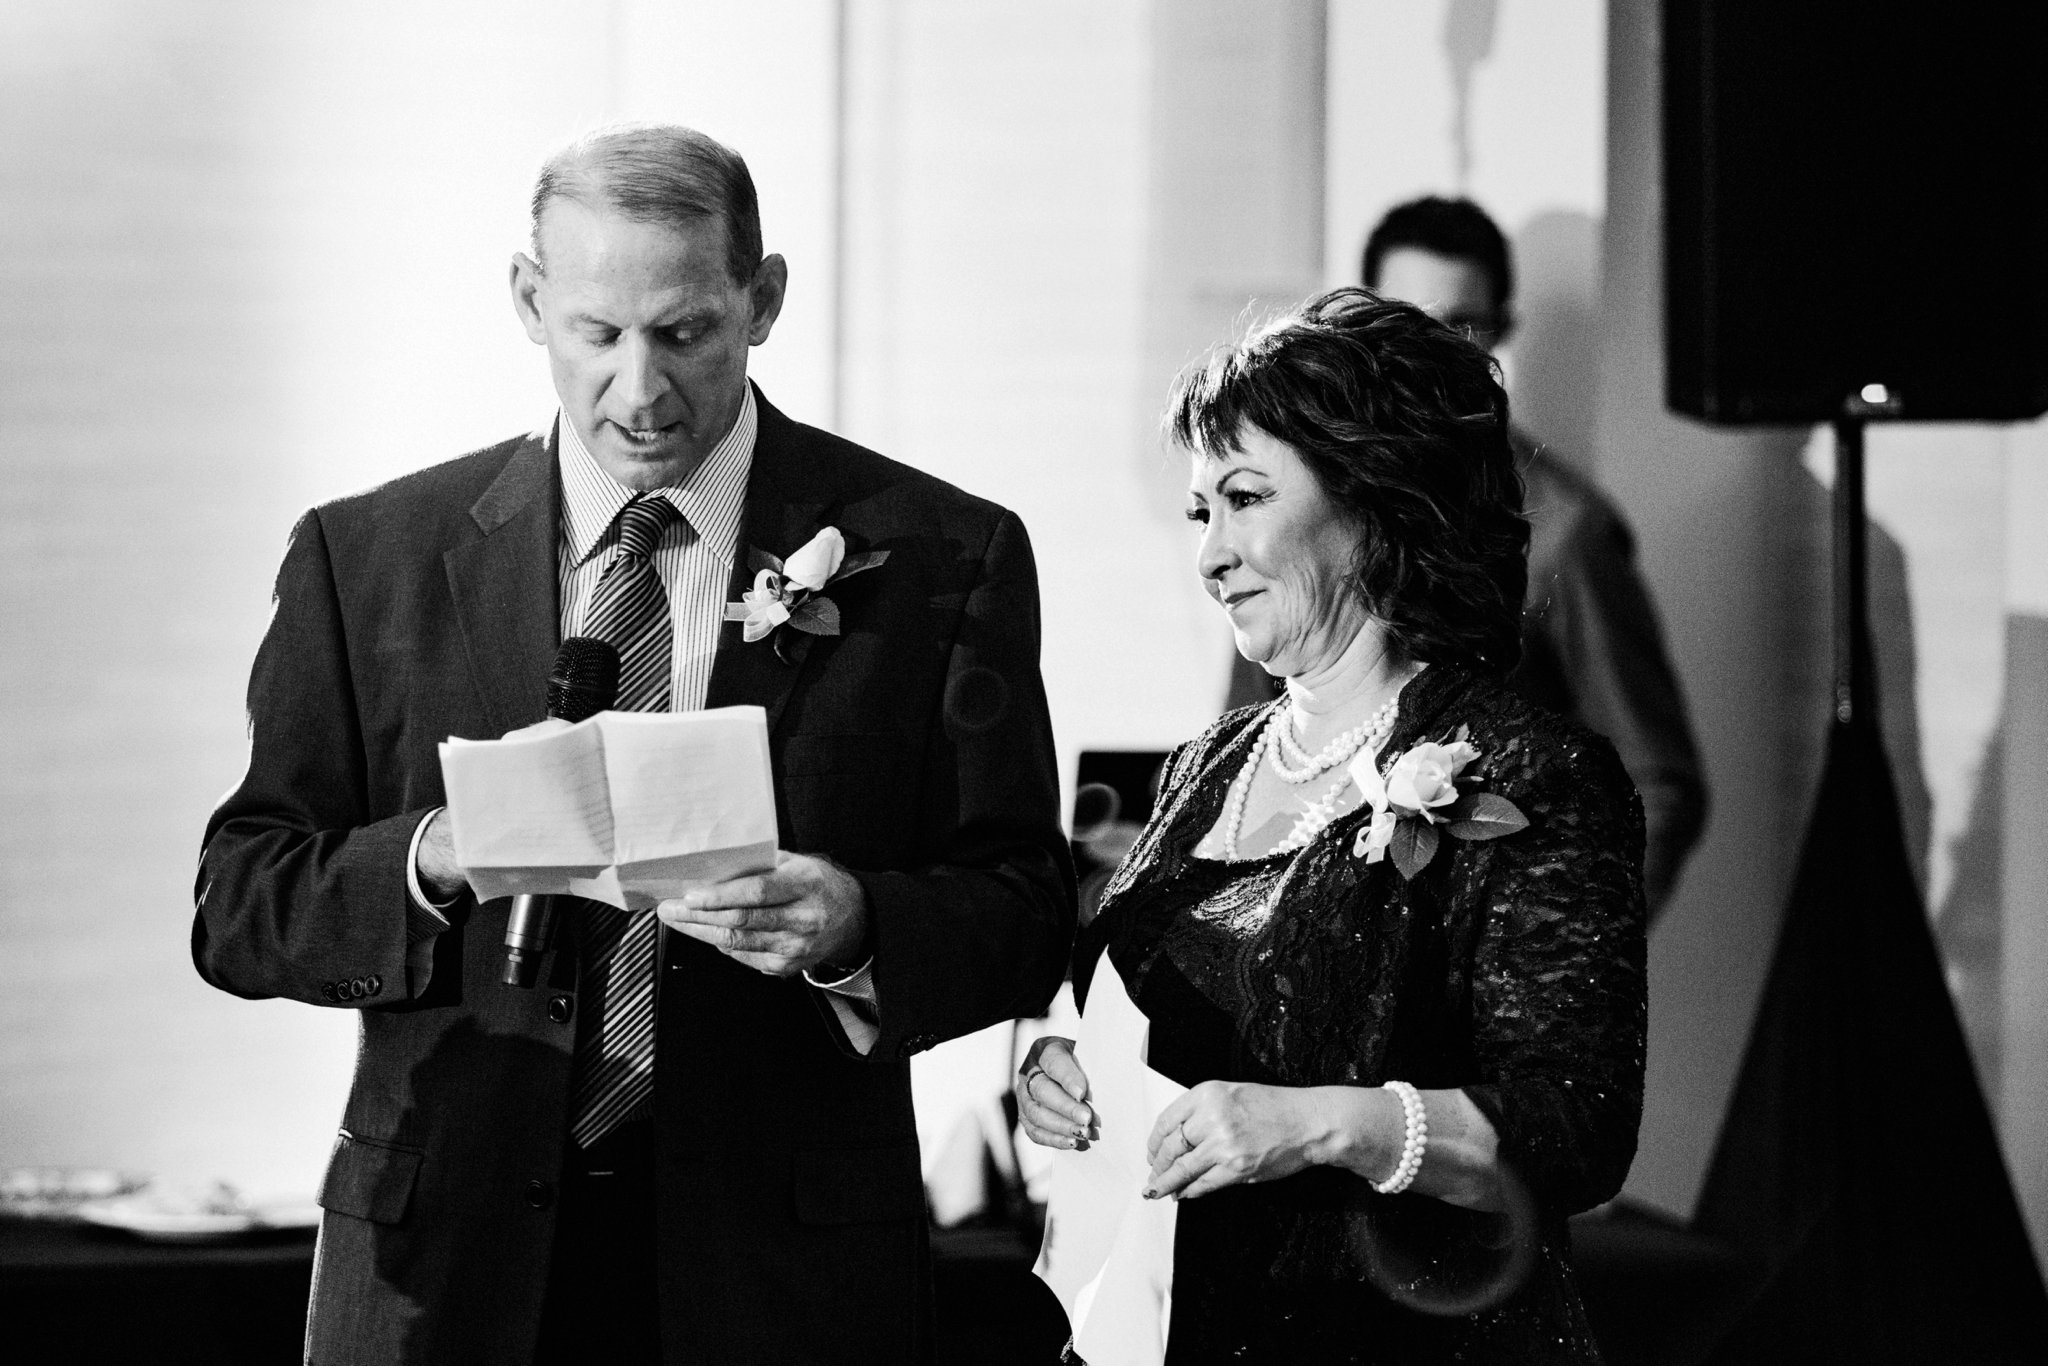 black and white | wedding | wedding photos | wedding photography | images by feliciathephotographer.com | Country Club Plaza | Kansas City | The Marriott | Unity Temple | reception venue | toasts | speeches 